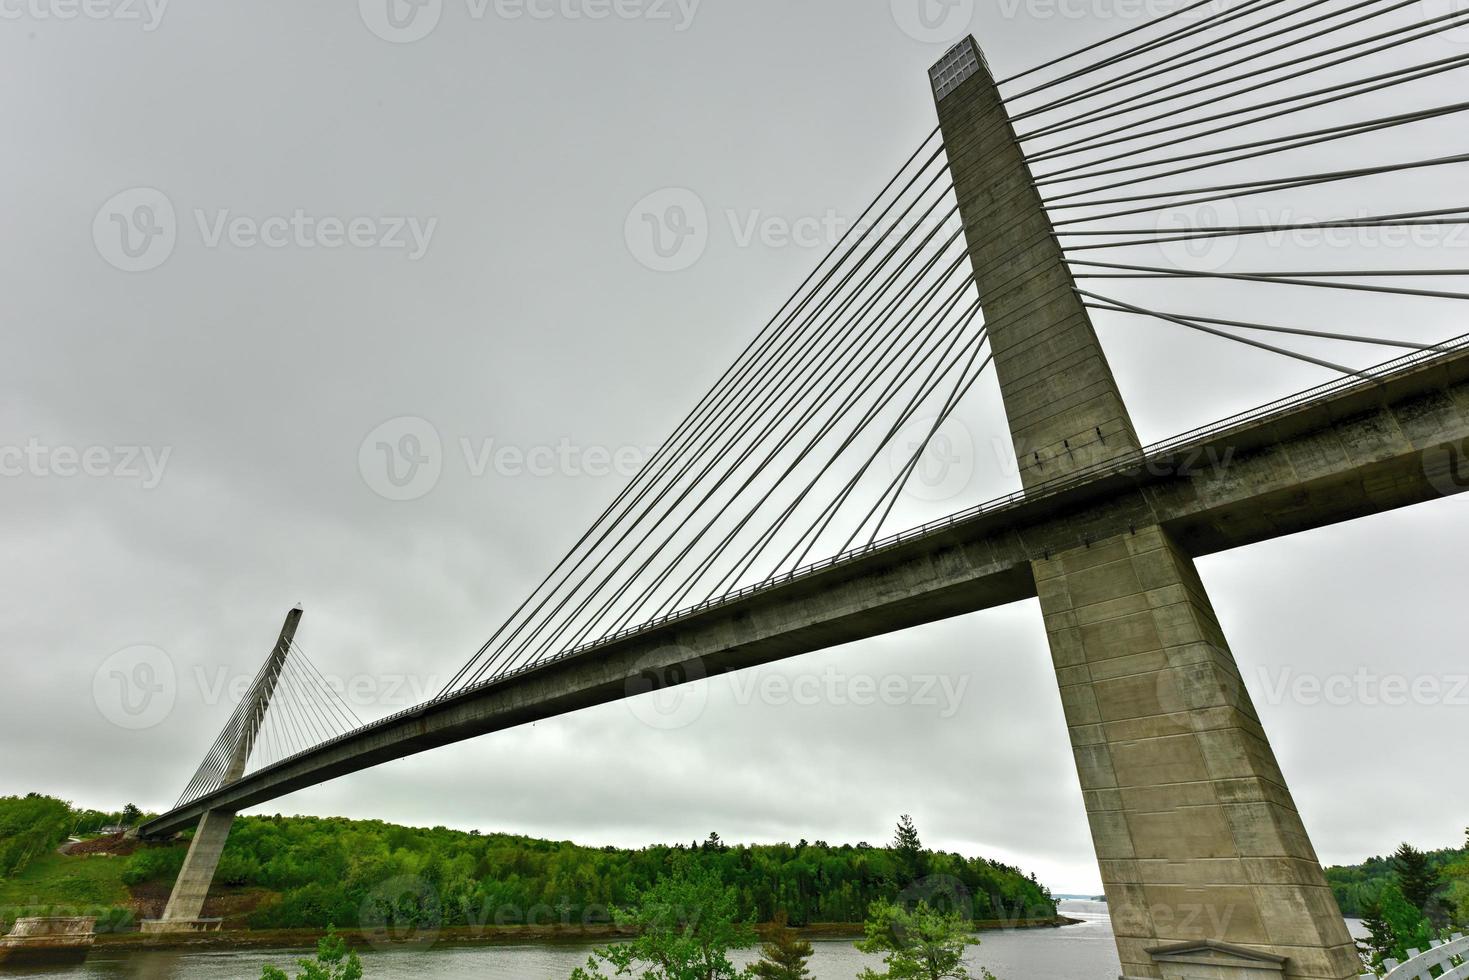 de penobscot narrows bro är en 2 120 fötter lång kabelstag bro över de penobscot flod i maine. foto